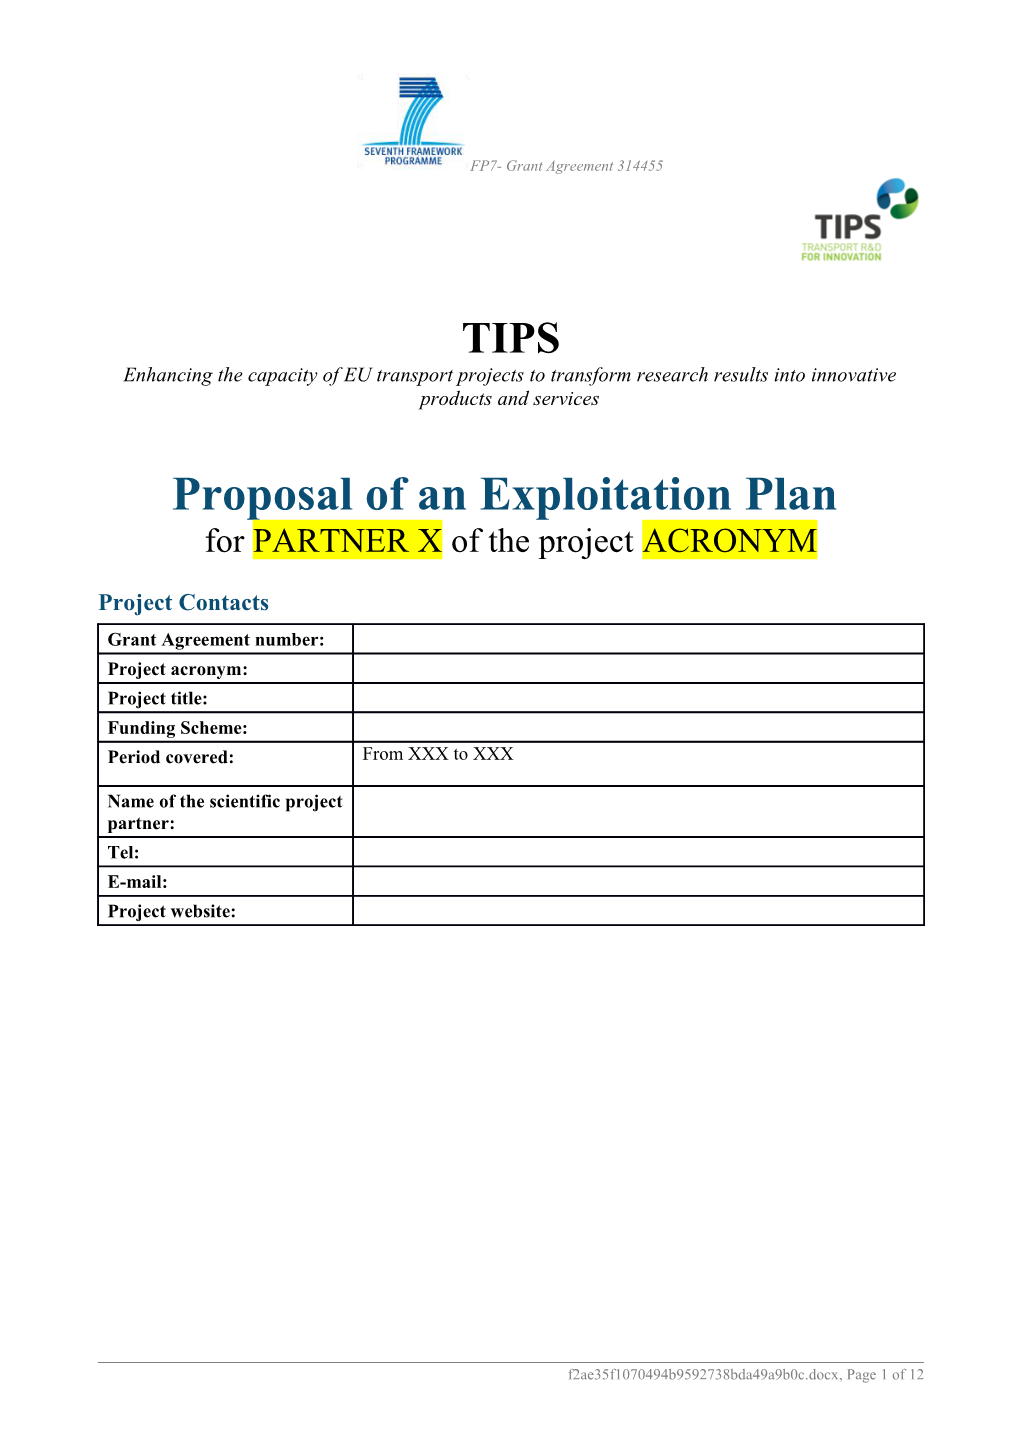 Proposal of an Exploitation Plan